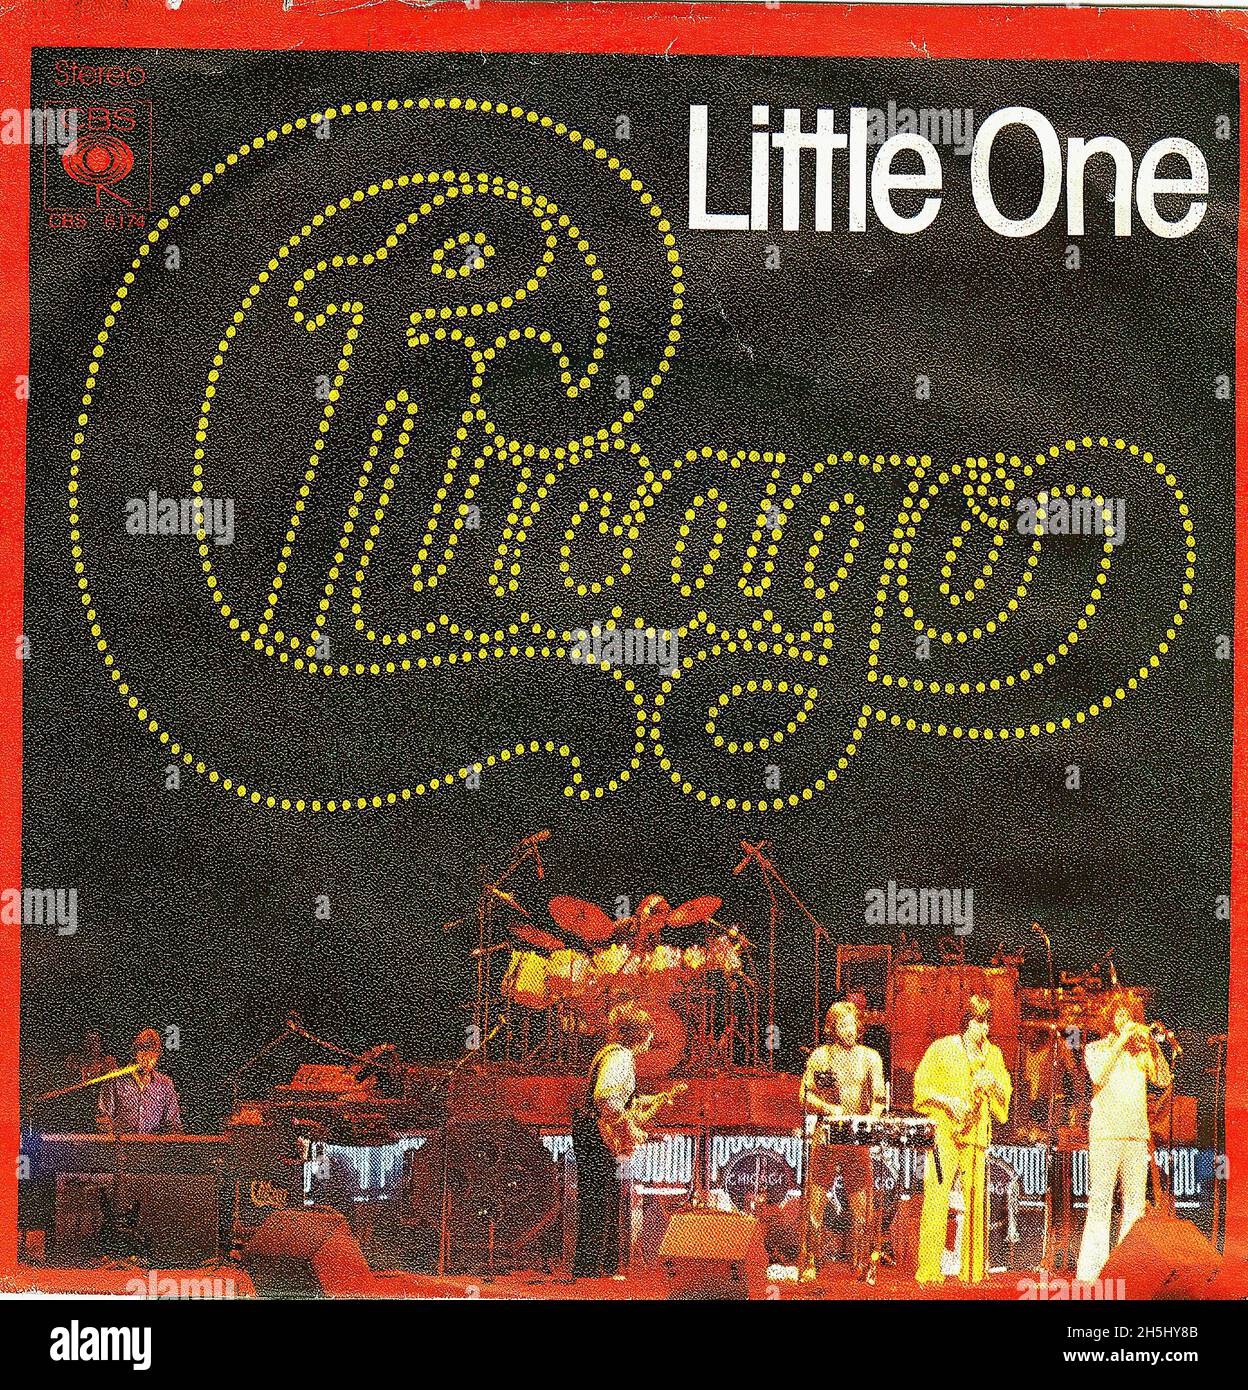 Portada de un solo disco vintage - Chicago - Little One - D - 1977  Fotografía de stock - Alamy